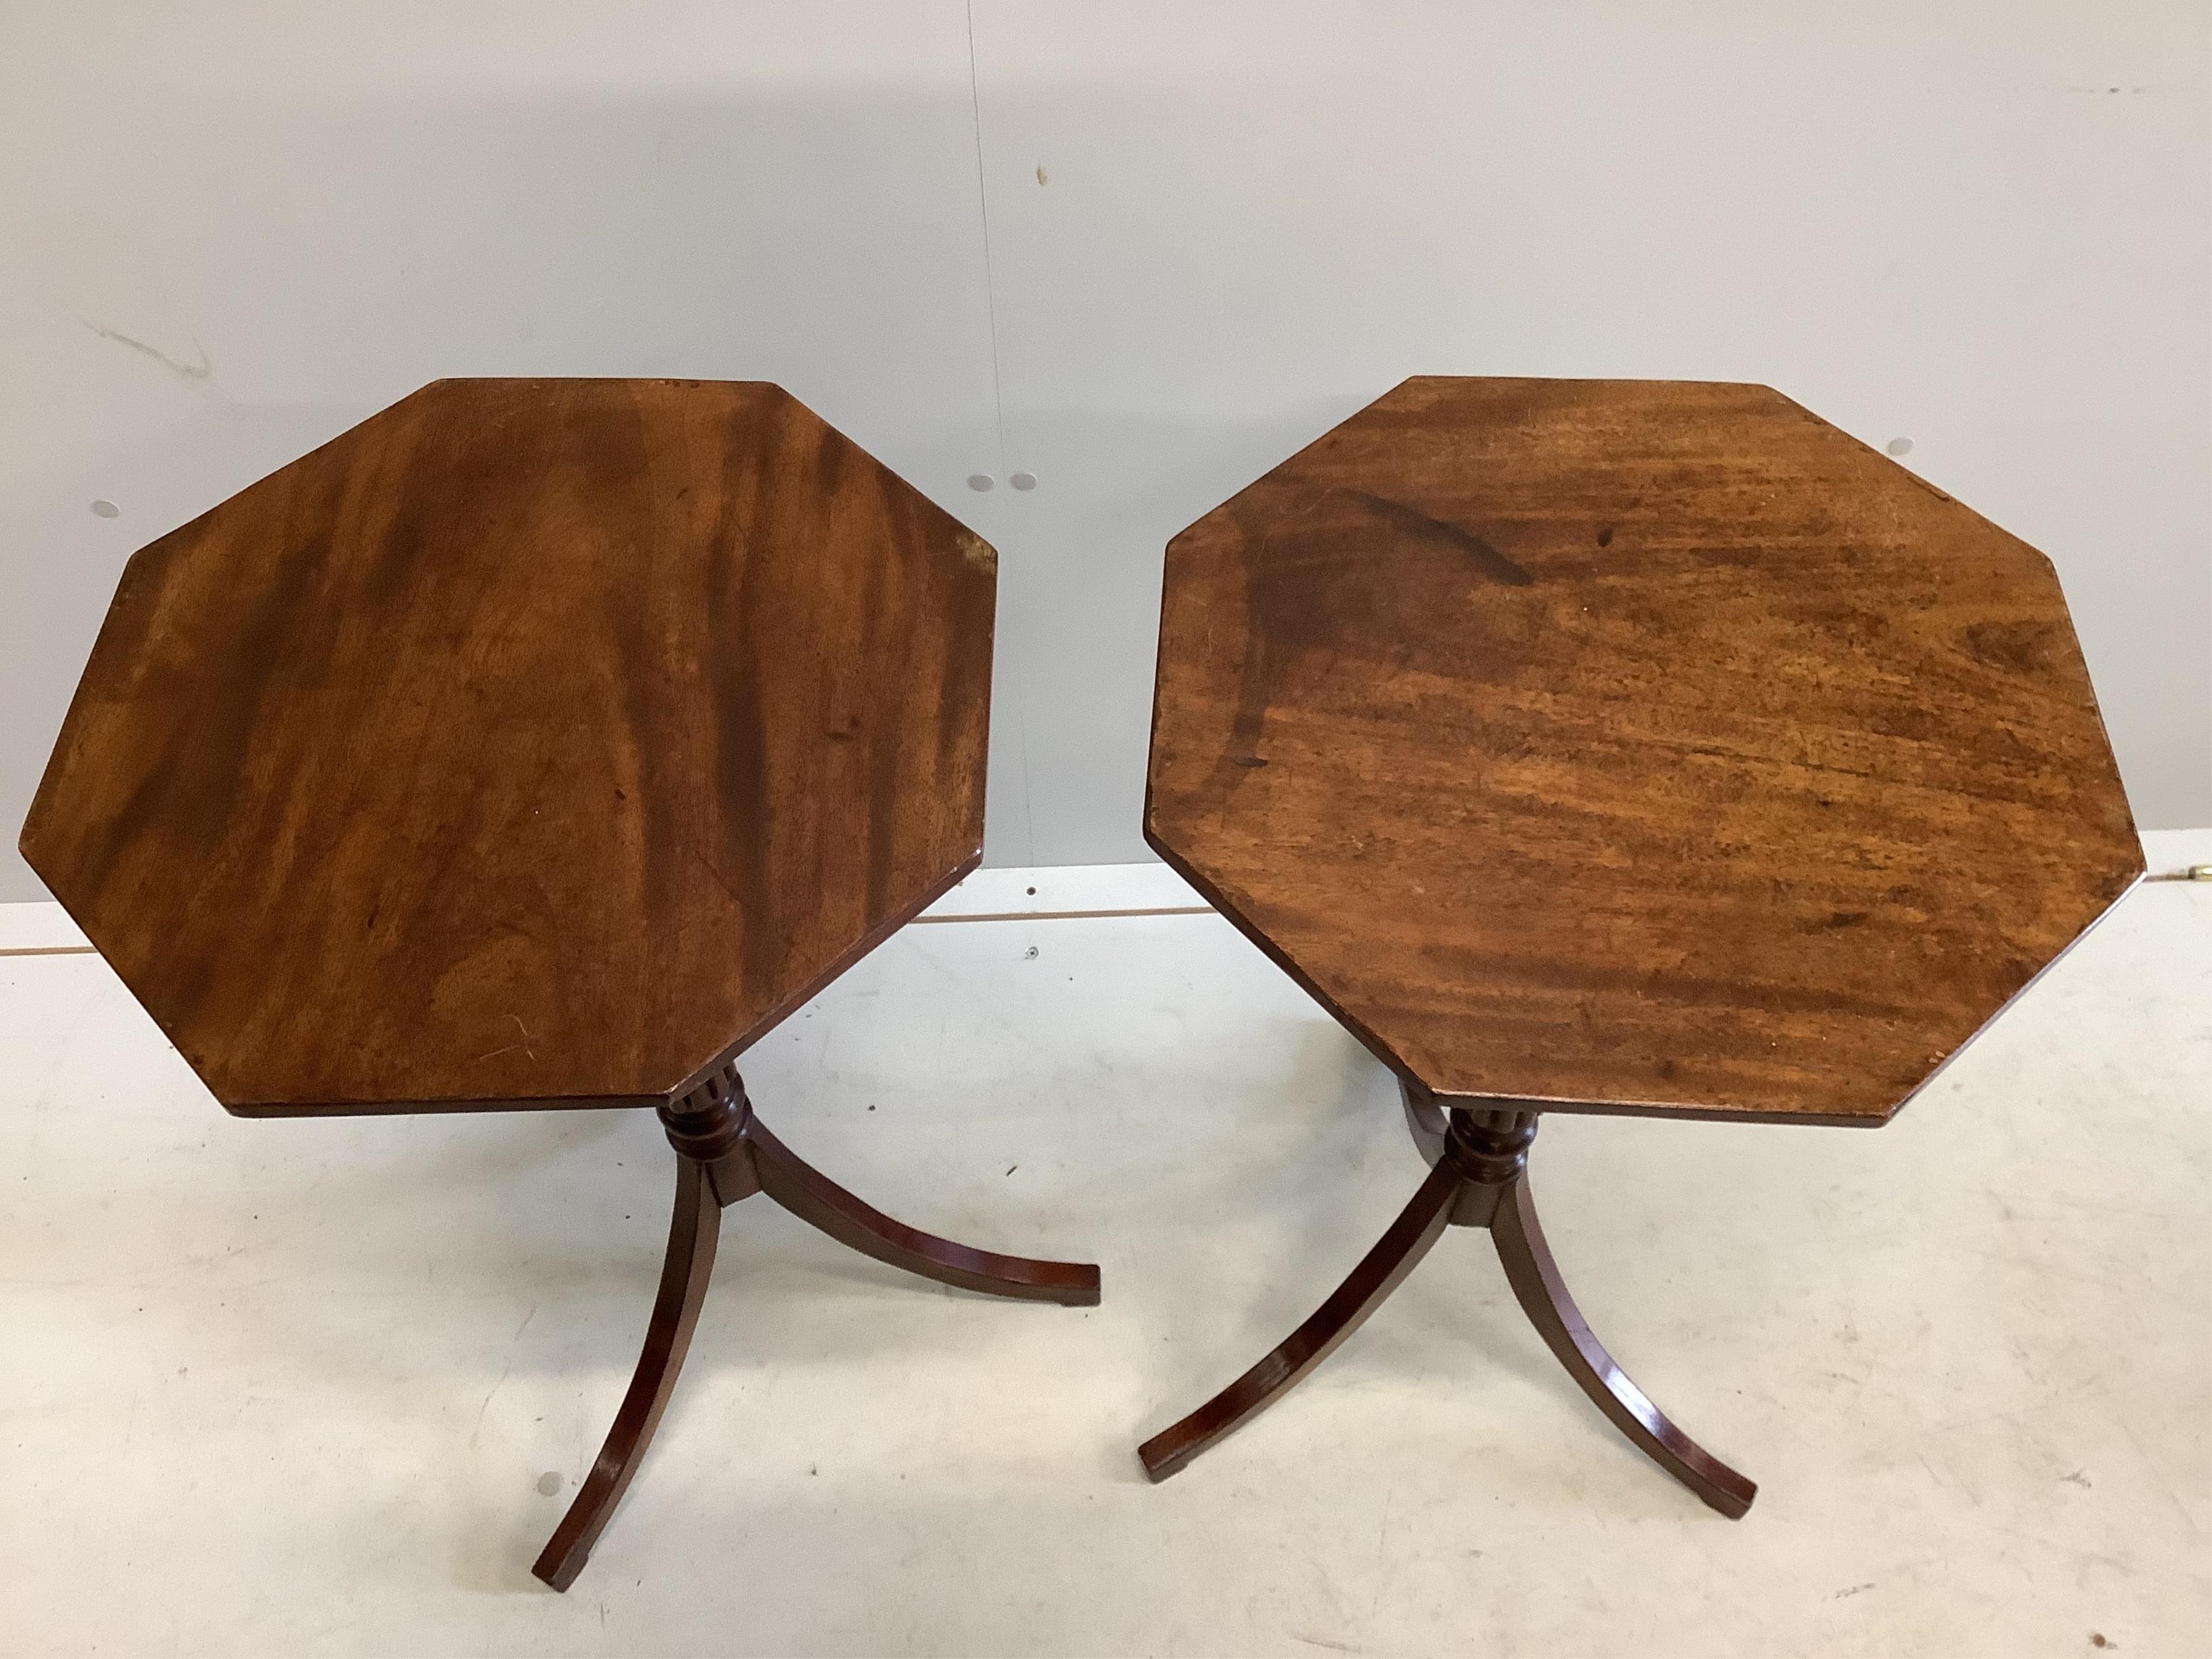 A pair of Regency style octagonal mahogany tripod wine tables, width 41cm, height 71cm